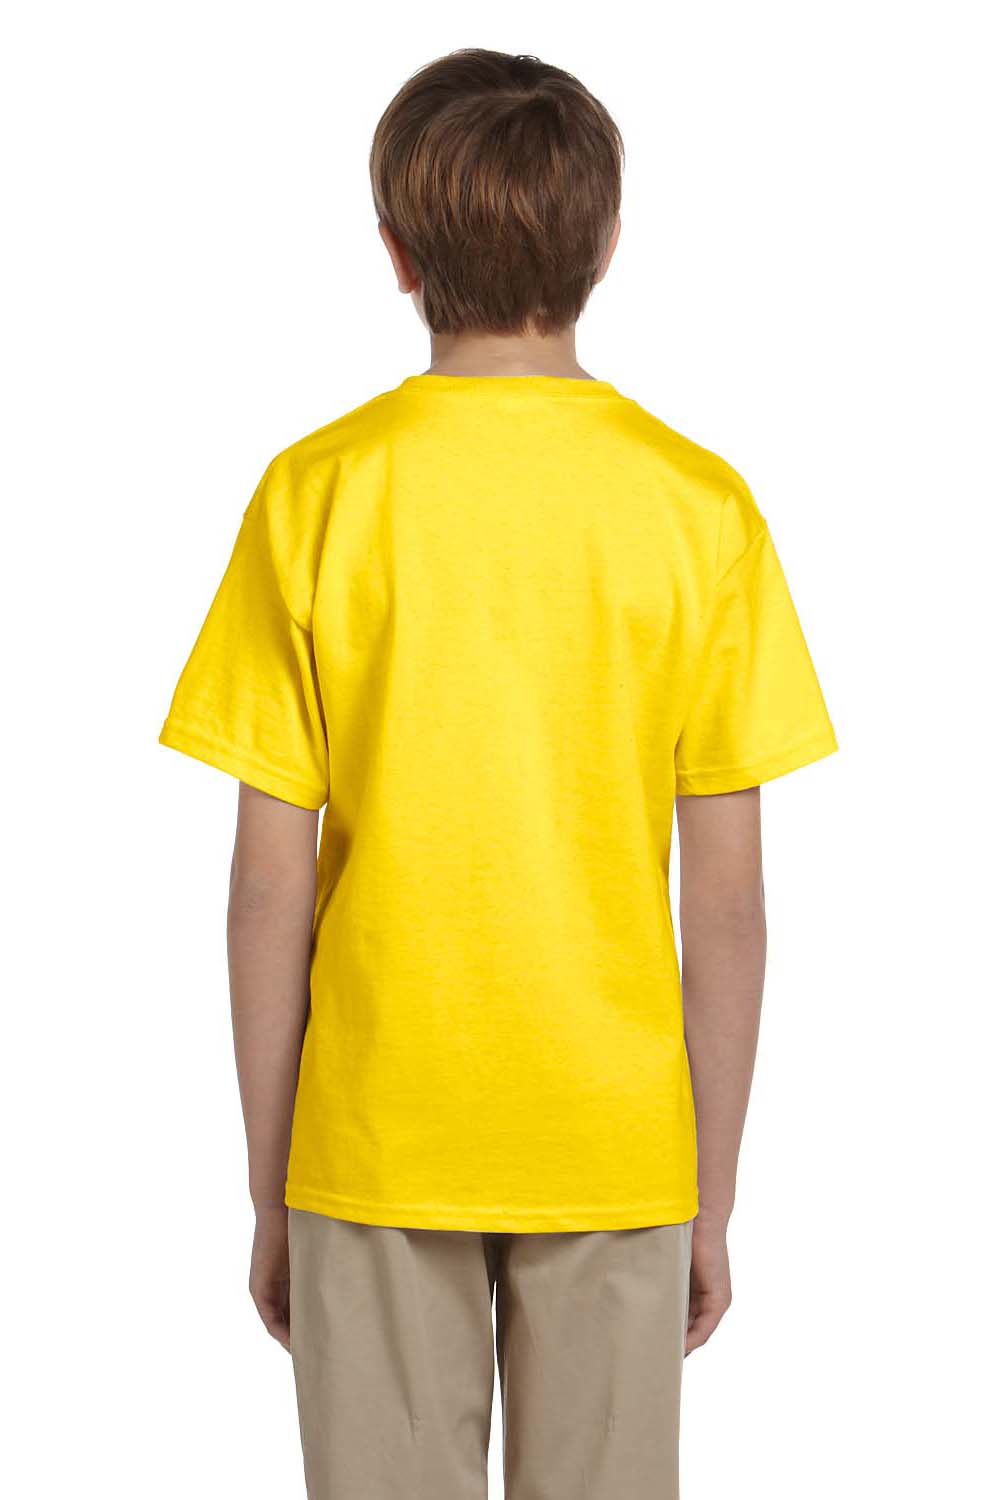 Hanes 5370 Youth EcoSmart Short Sleeve Crewneck T-Shirt Yellow Back